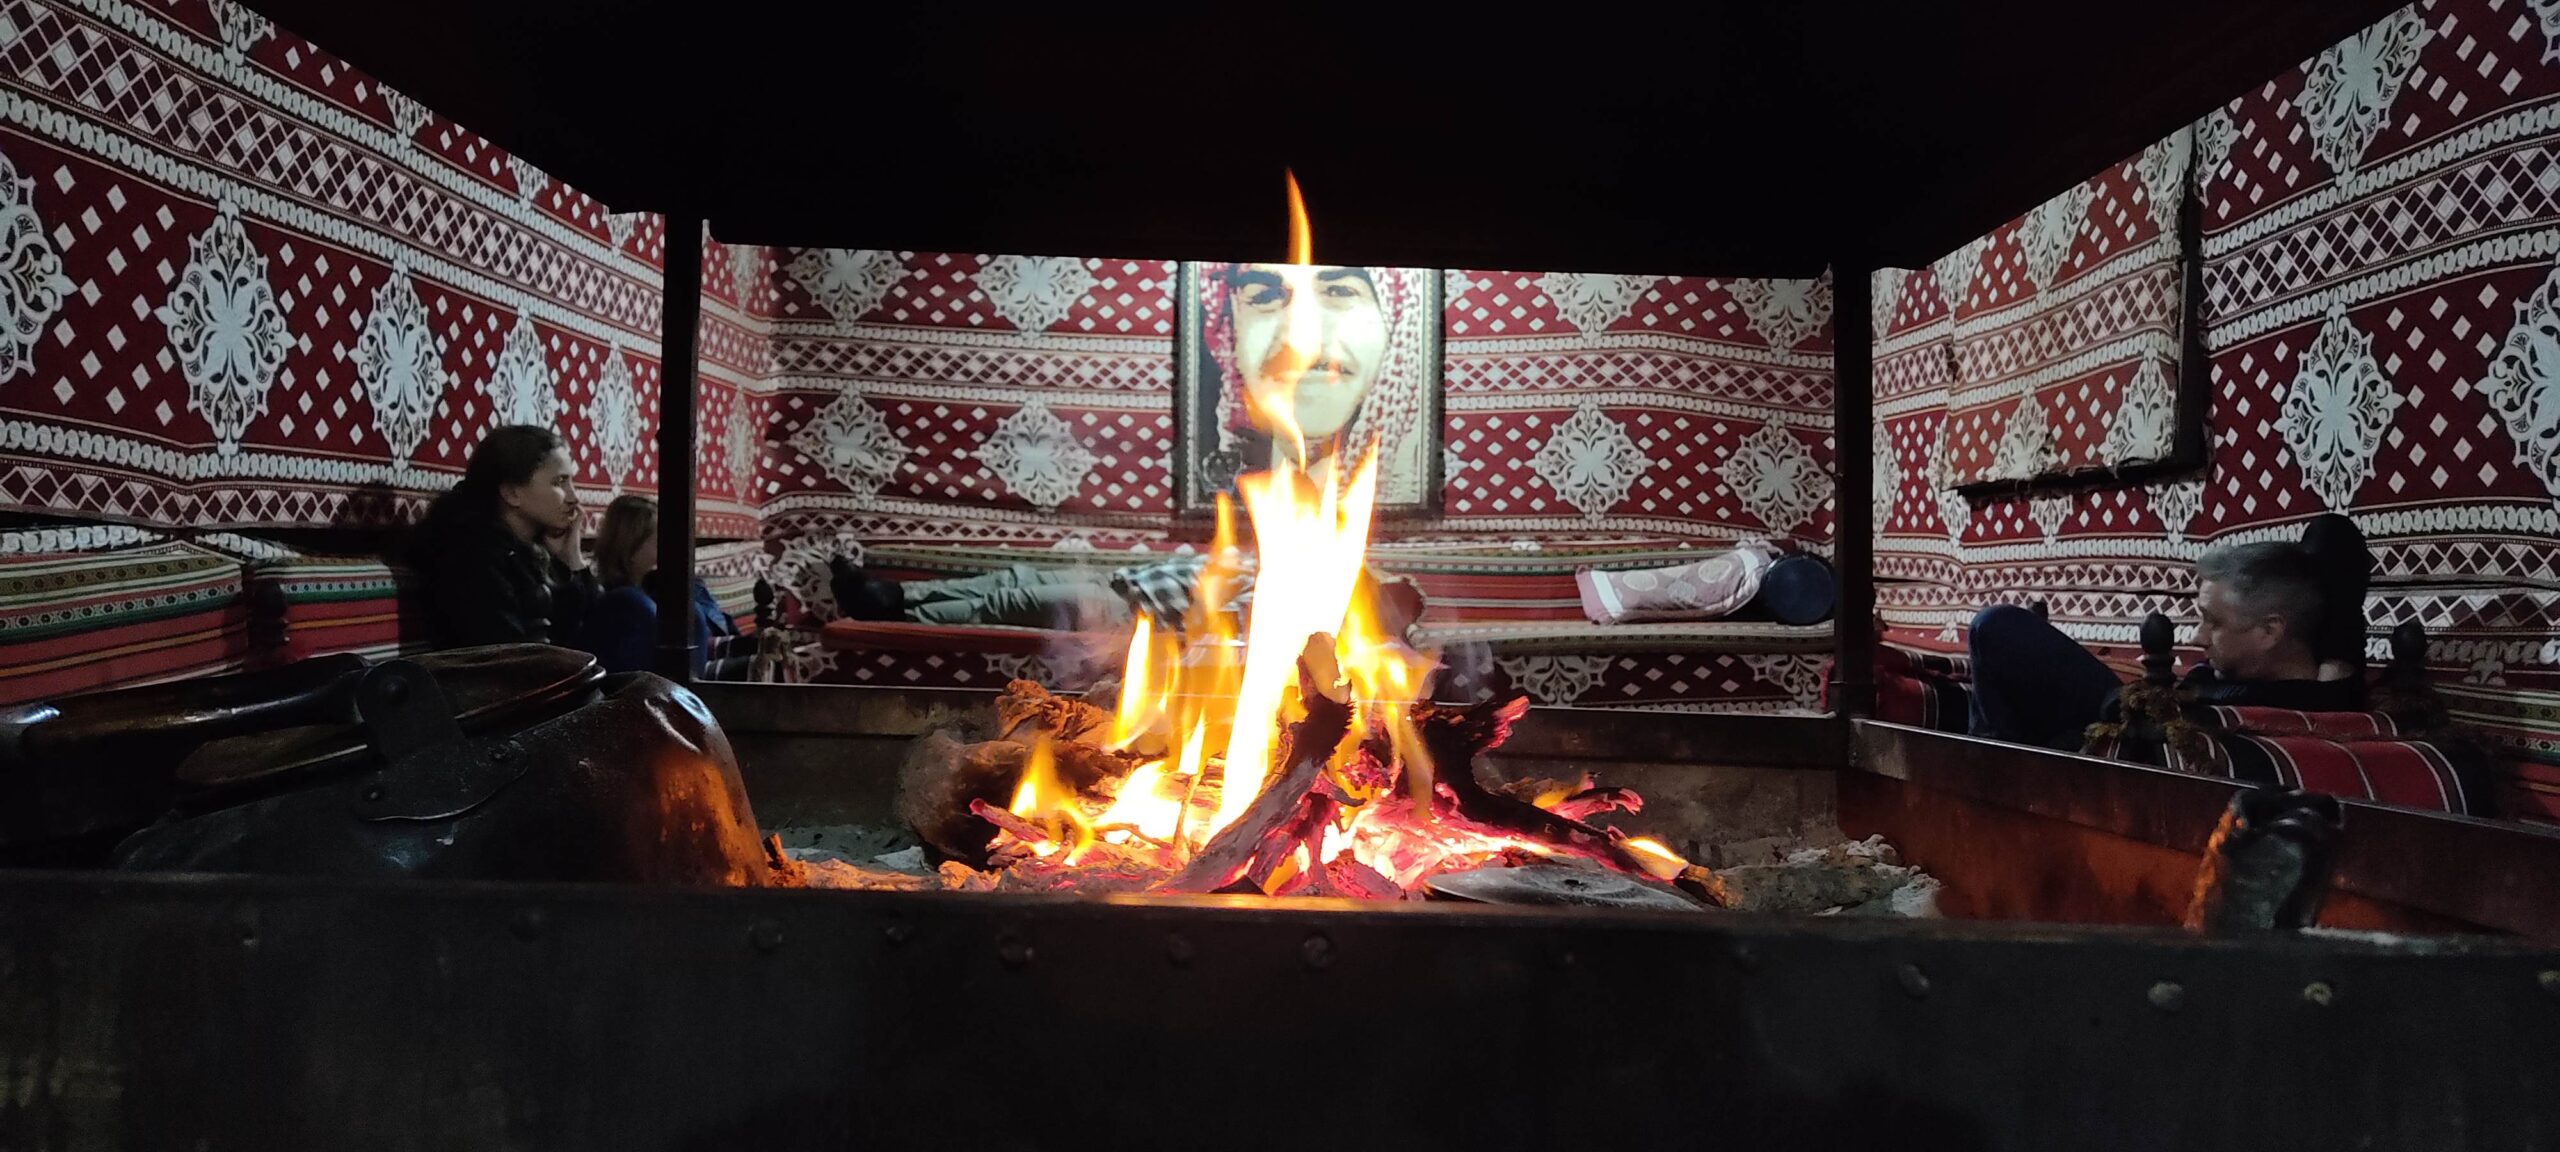 fireplace in camp wadirumhappy